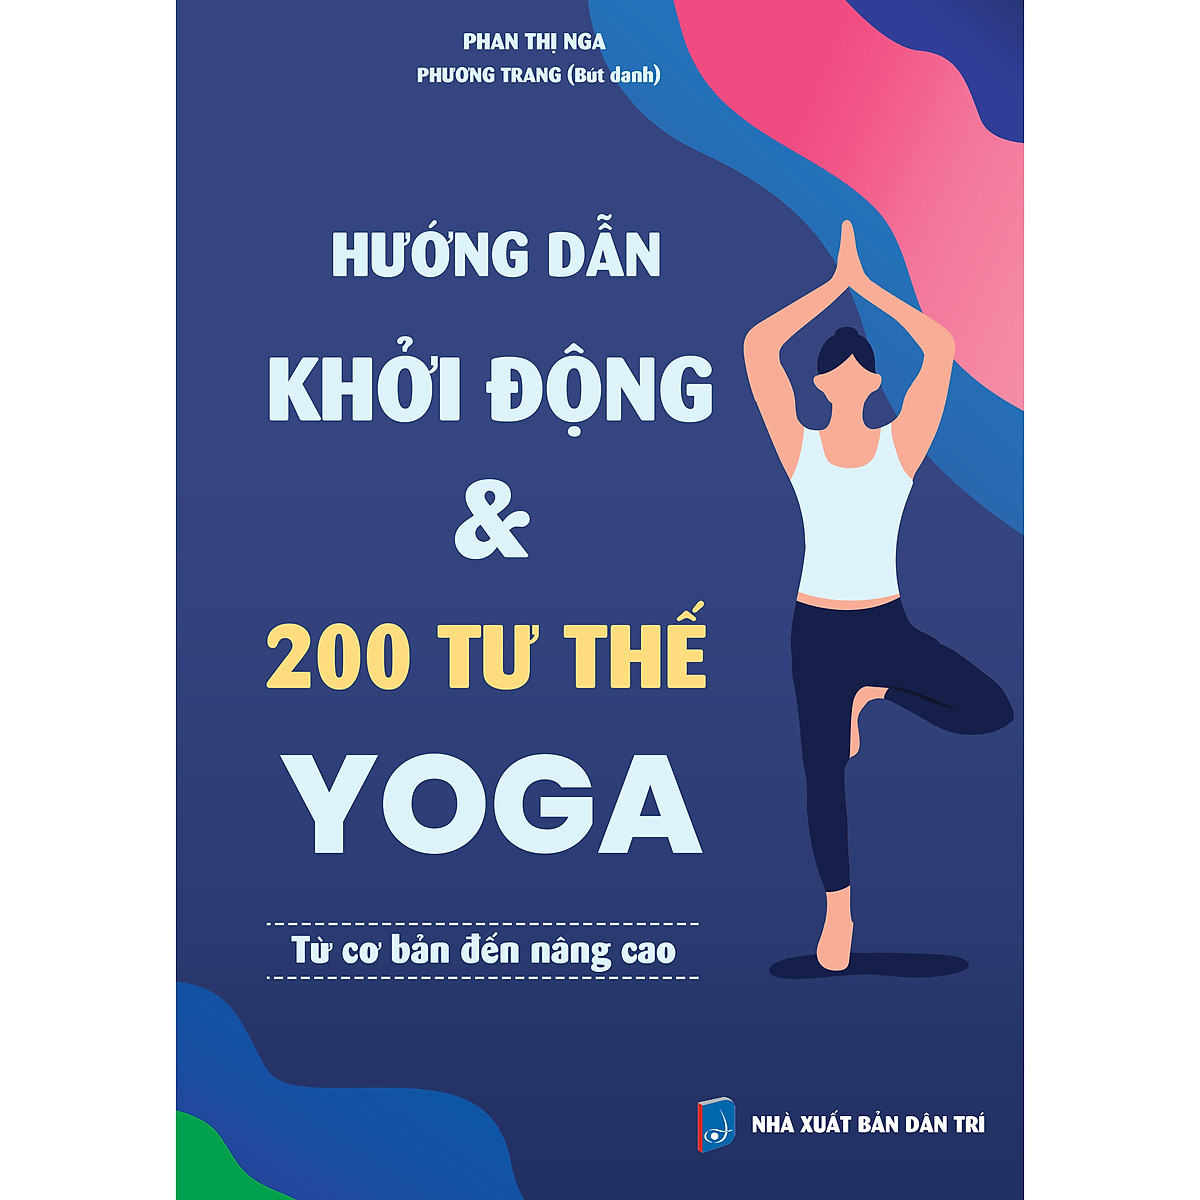 08-HD khoi dong va 200 tu the yoga